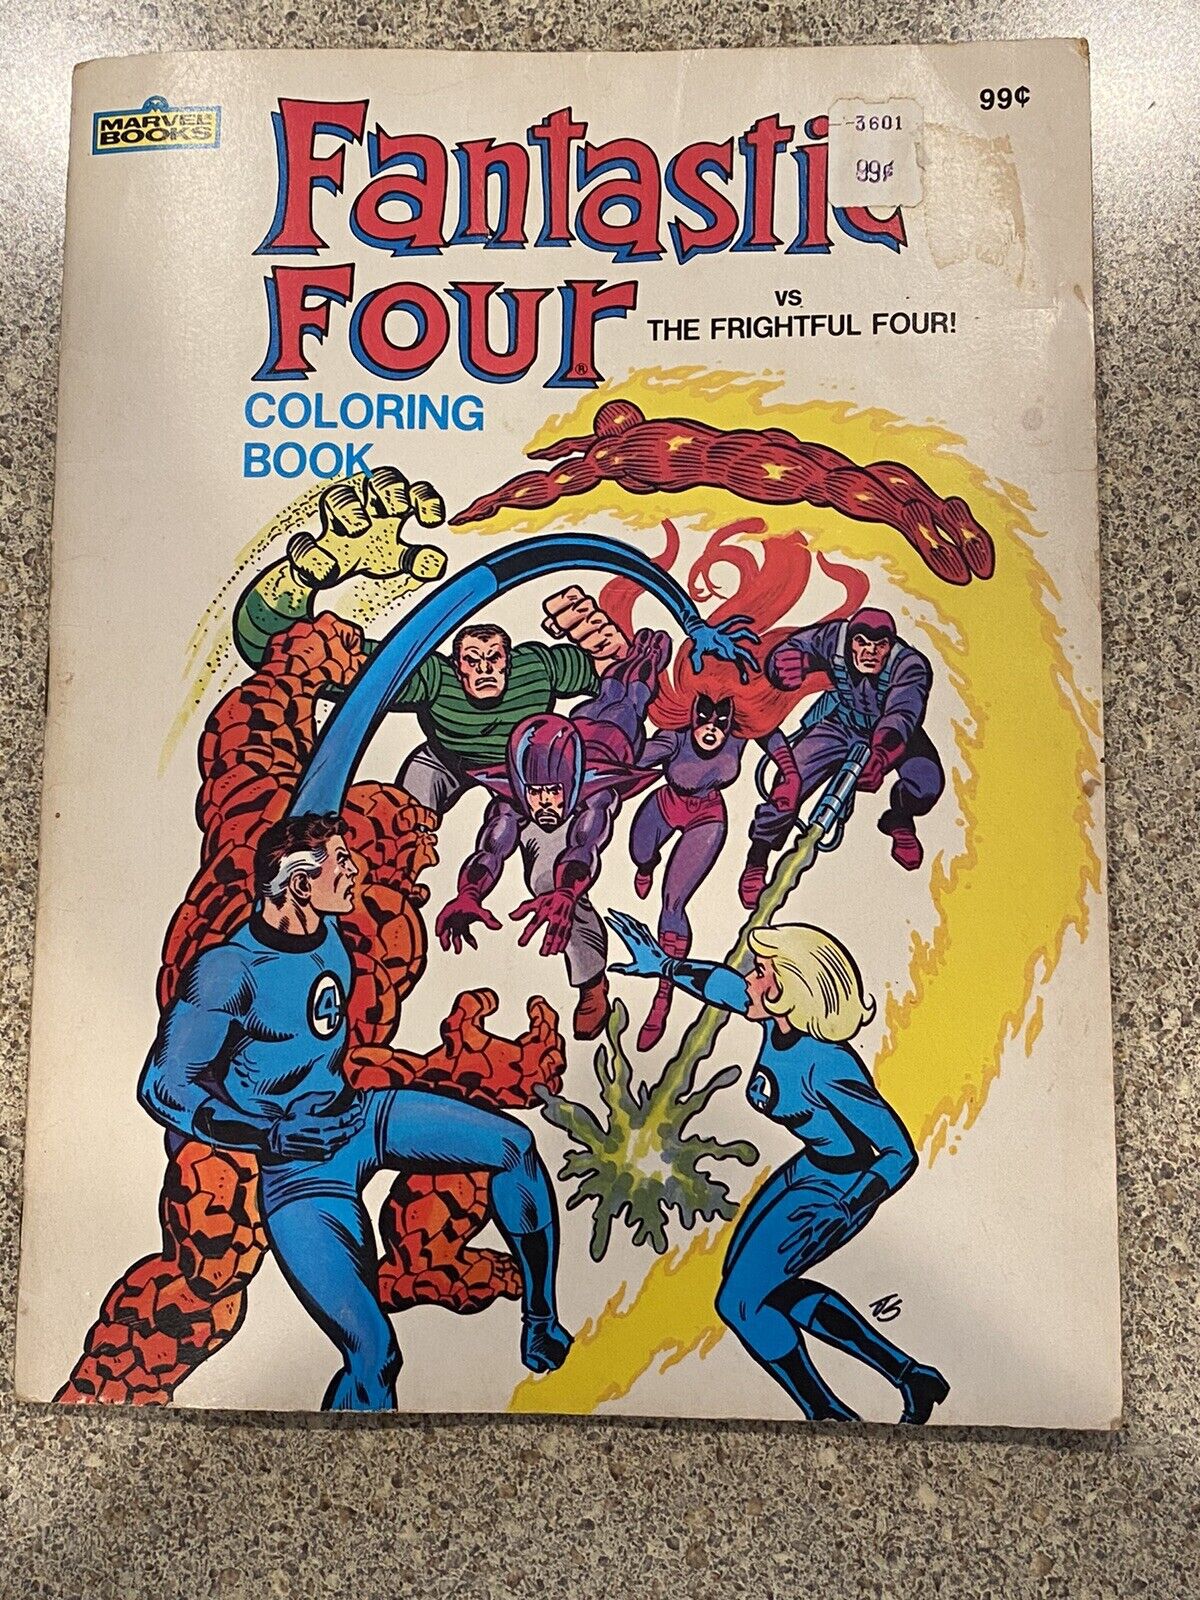 VINTAGE FANTASTIC FOUR RARE MARVEL SUPER HEROES COLORING BOOK  1983